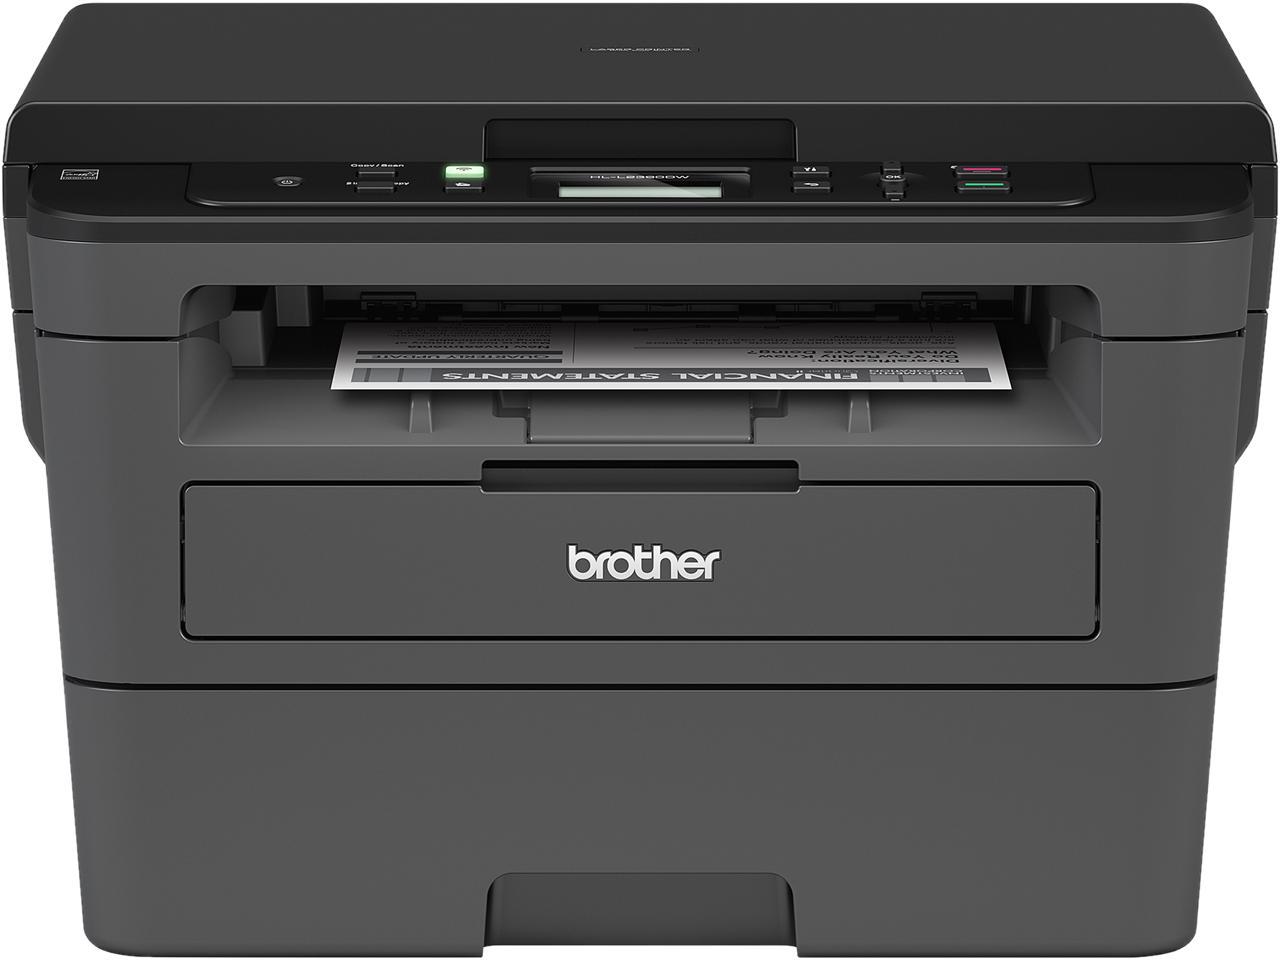 Brother HL-L2390DW Wireless MFC Laser Printer $150